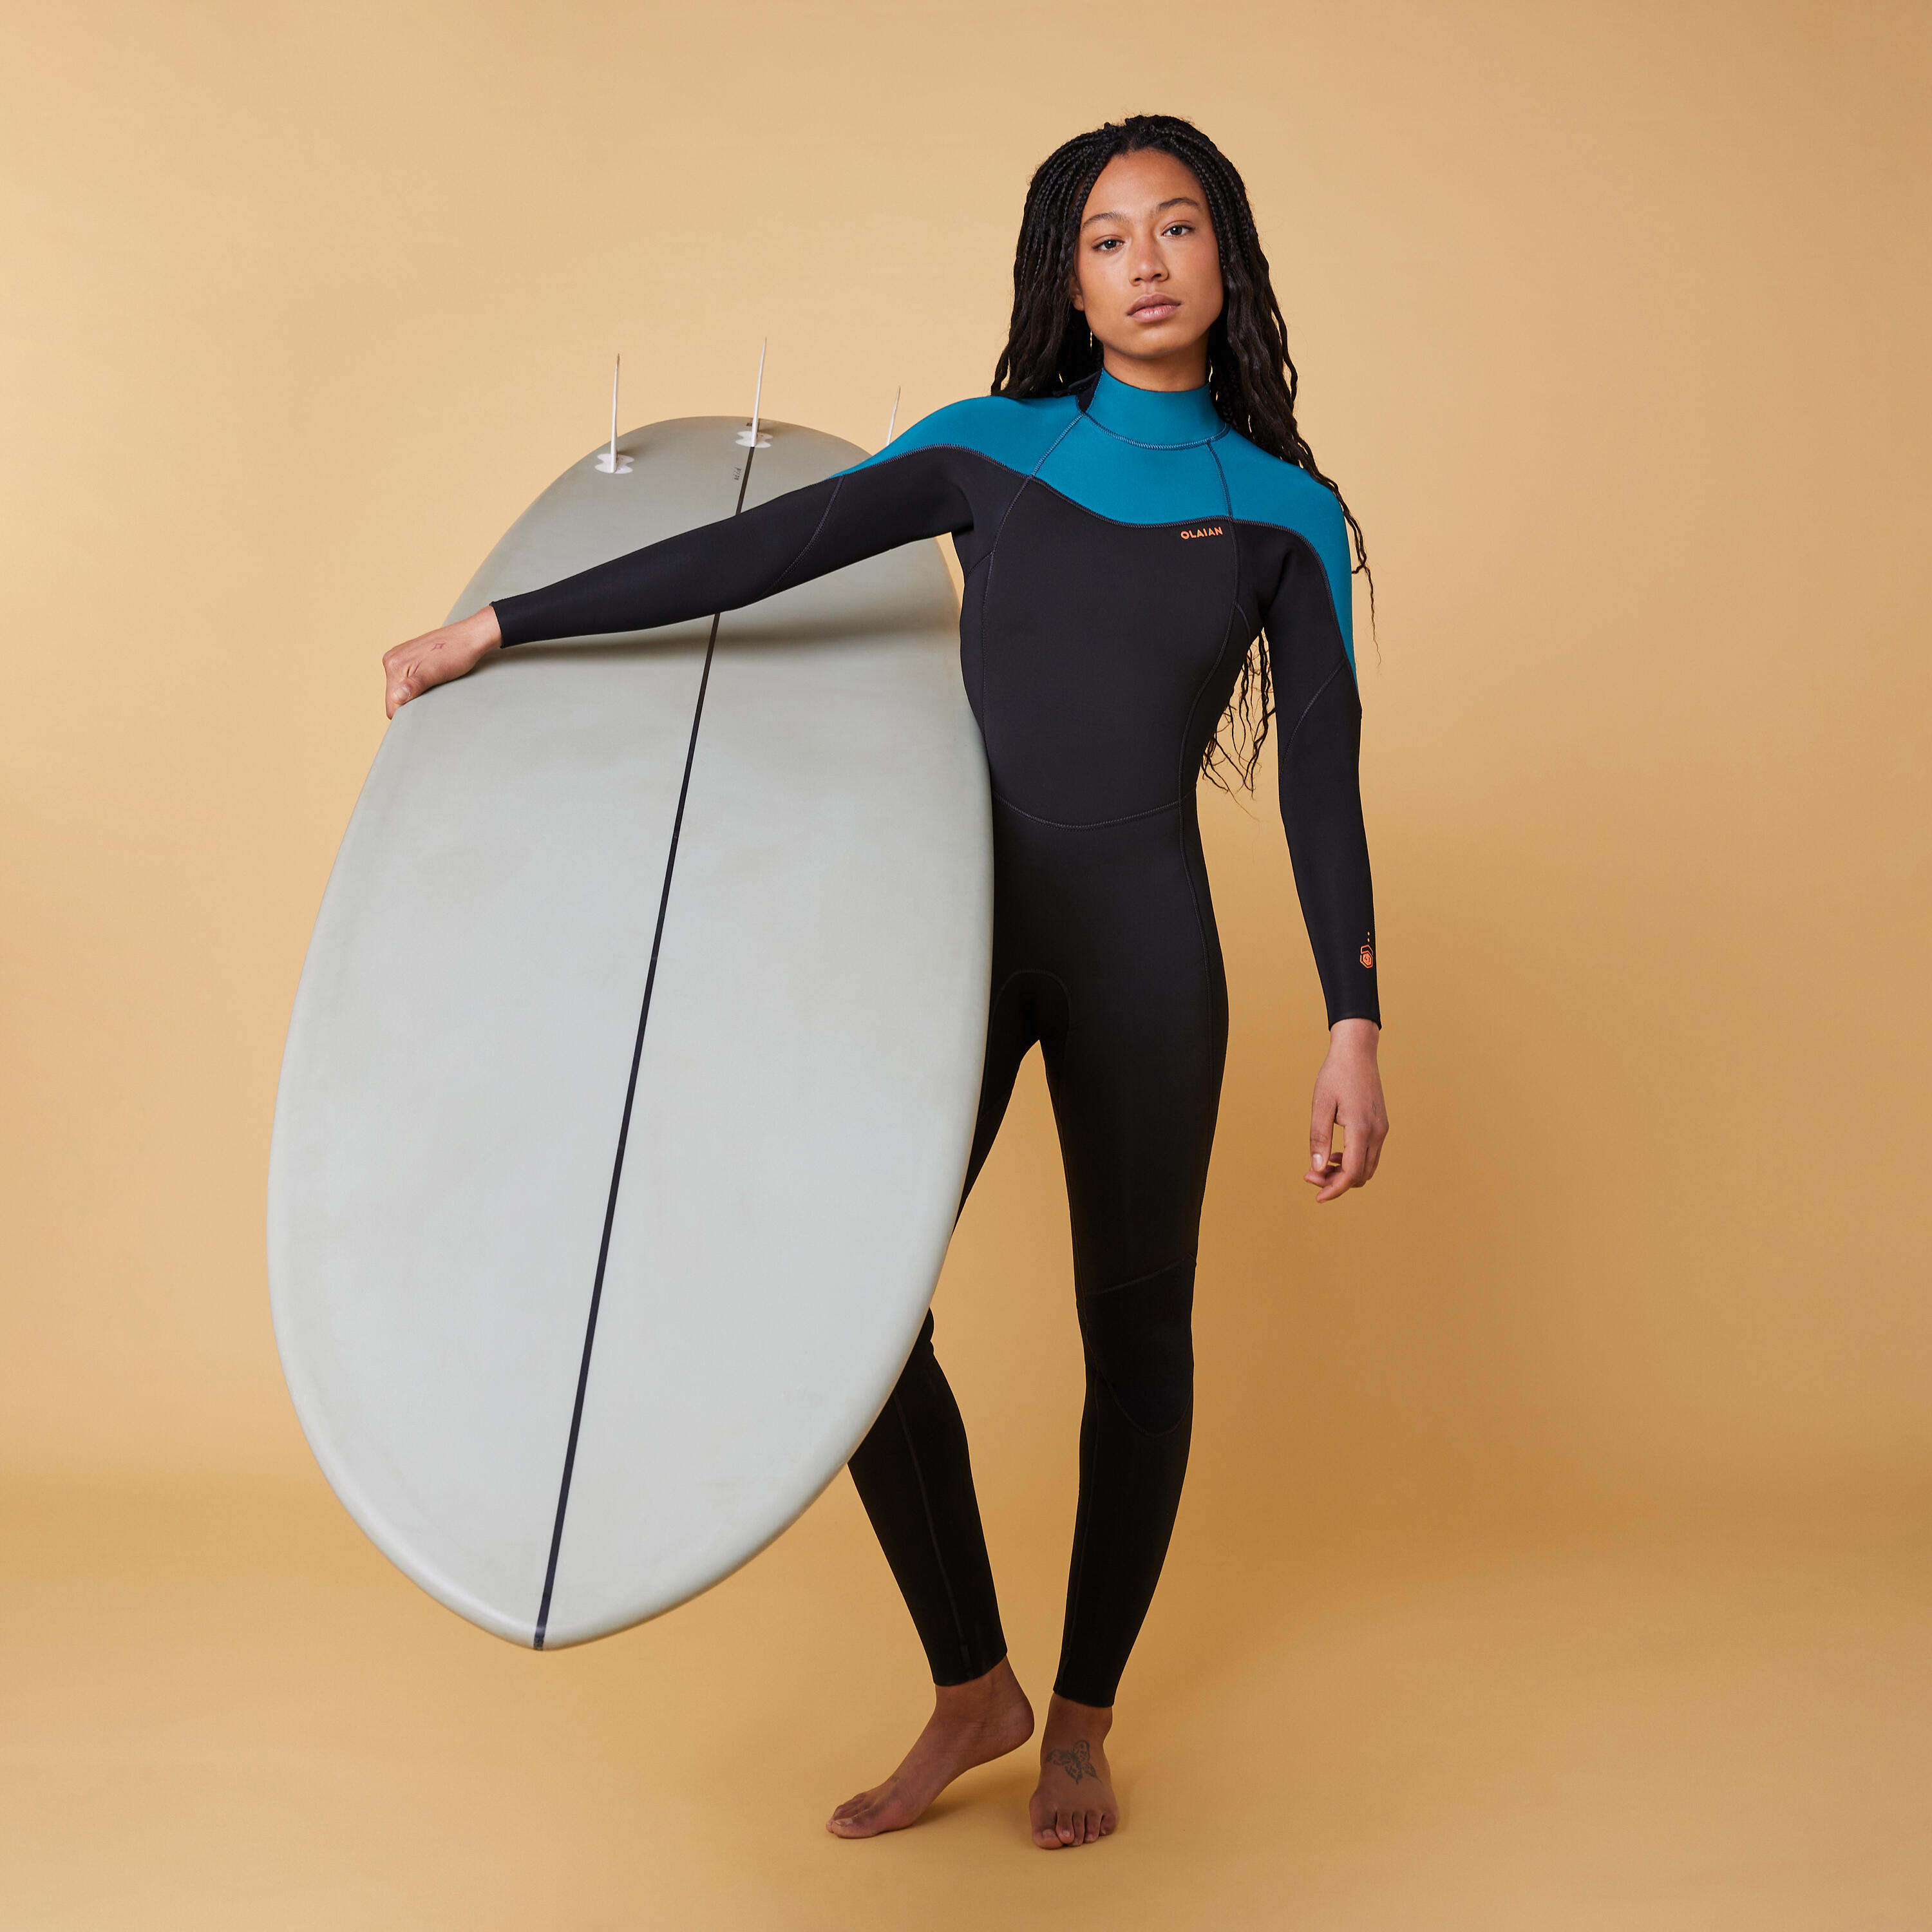 OLAIAN Neoprenanzug Surfen Damen 4/3 Rückenreissverschluss - 500 schwarz/grün XS